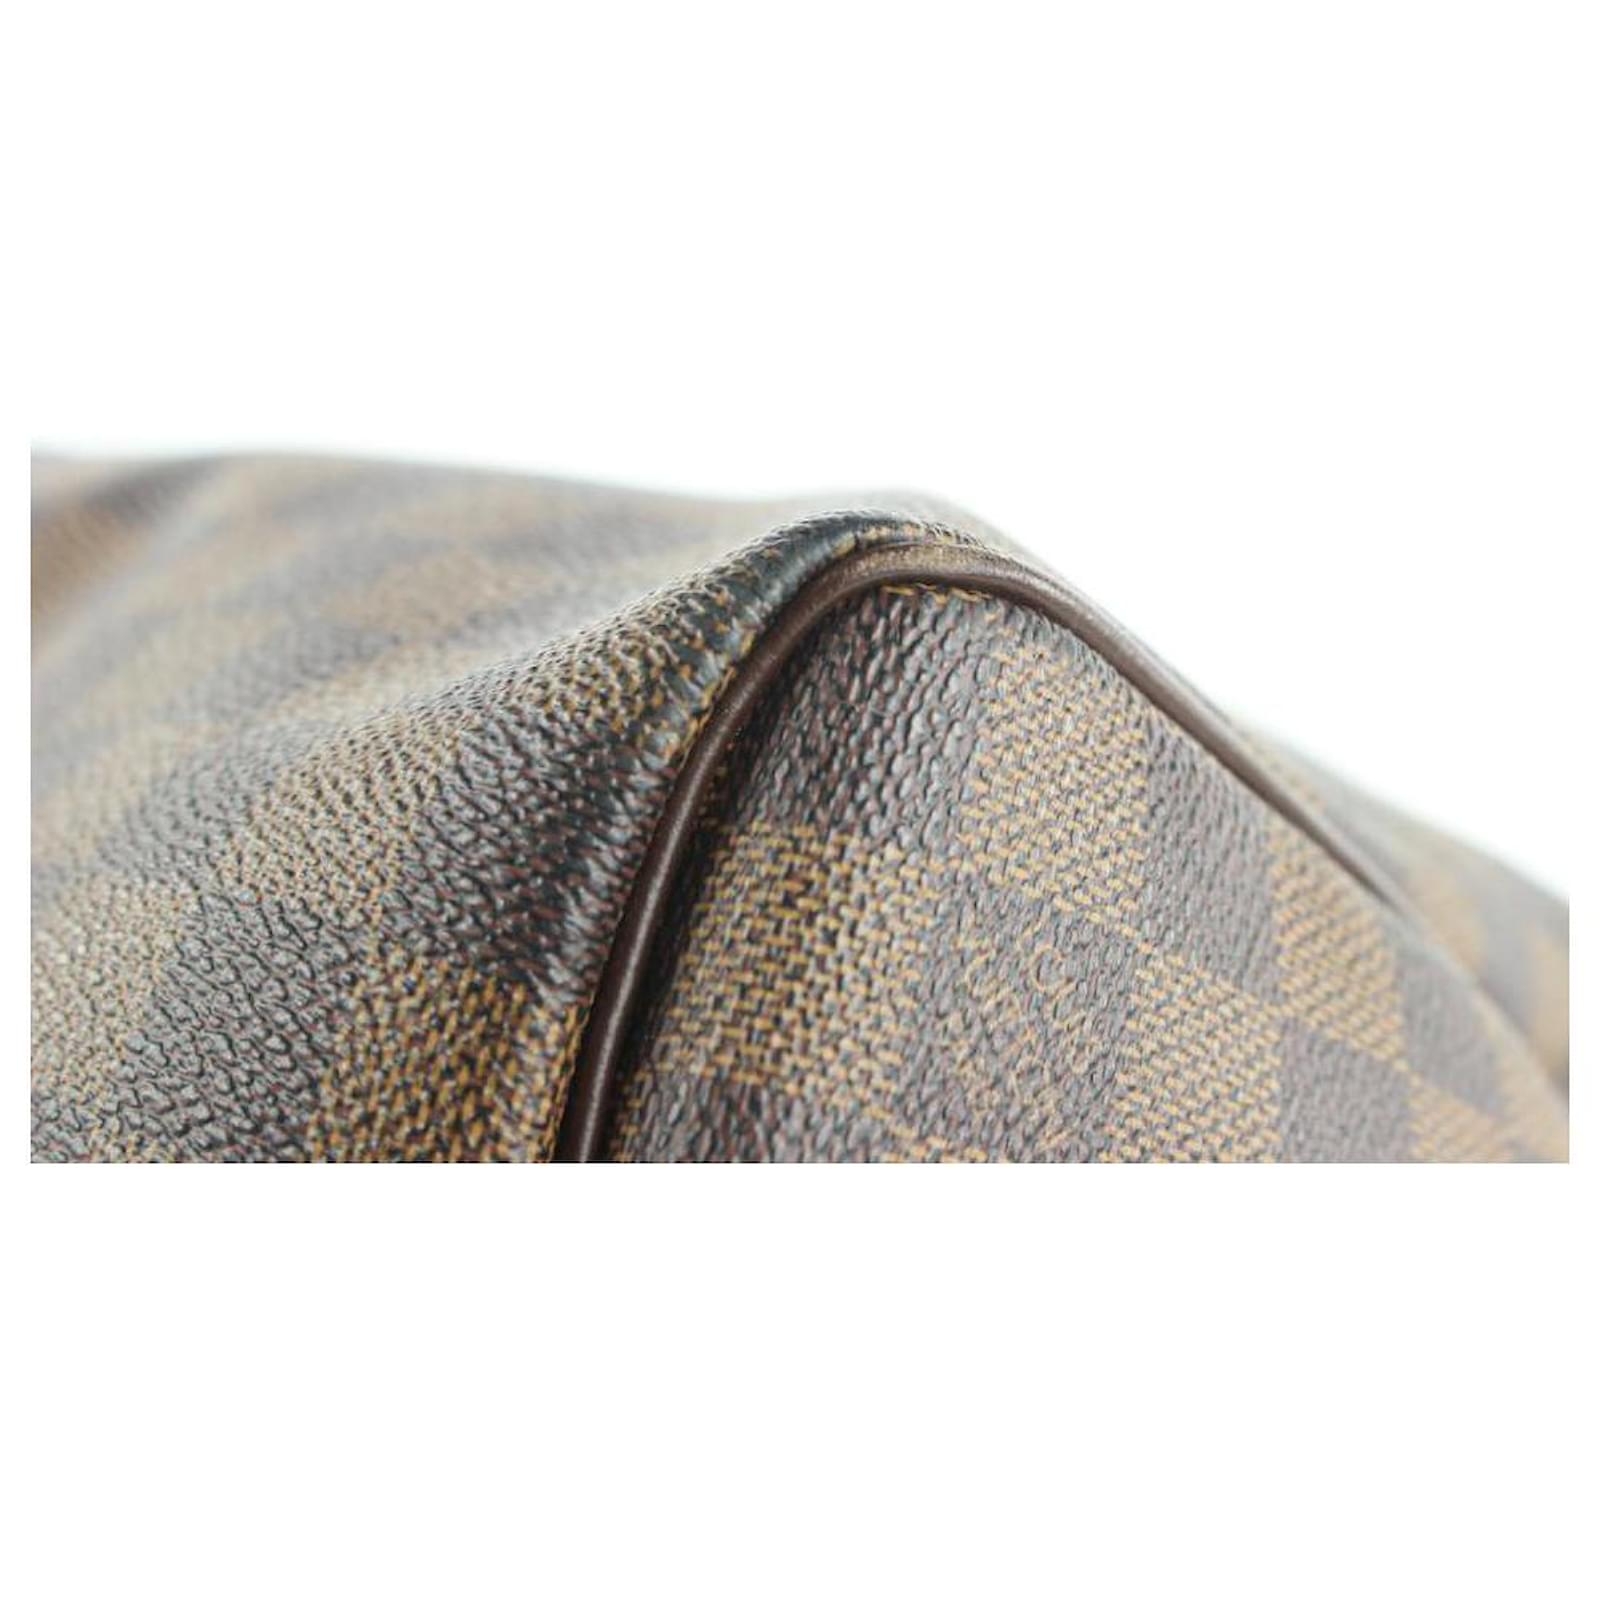 Louis Vuitton Damier Ebene Keepall 50 Duffle Bag 4lv1123